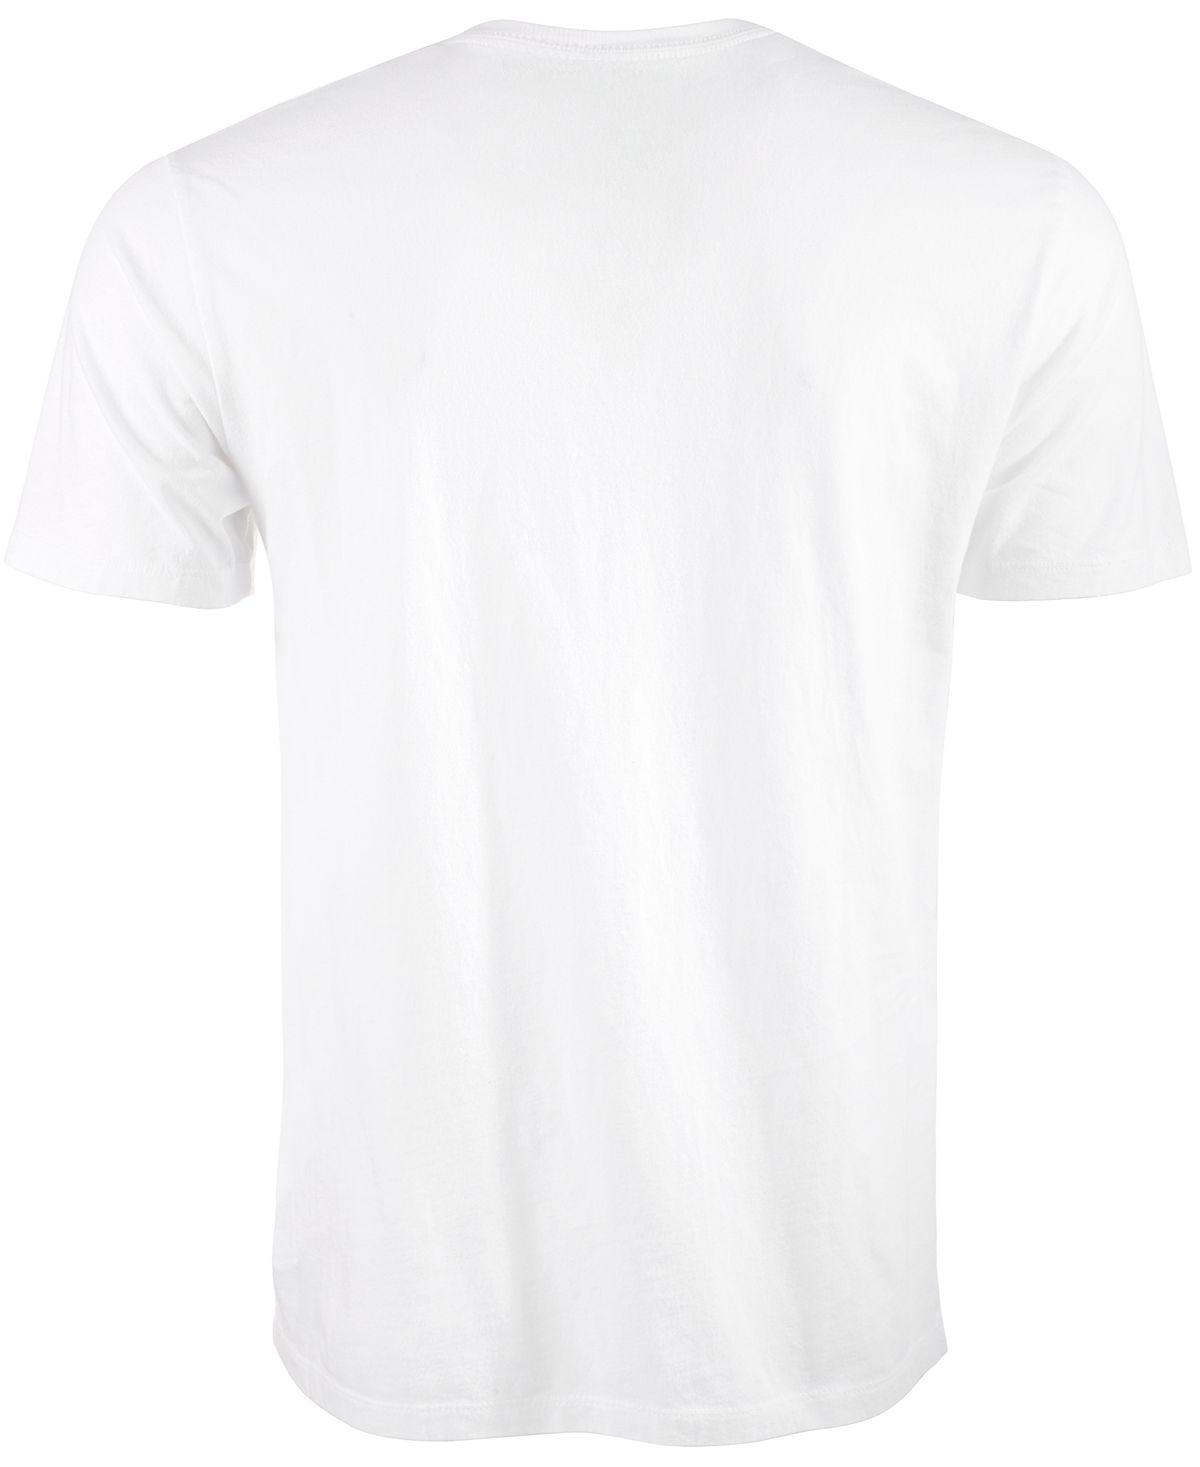 True Religion Buddha Graphic T-shirt White